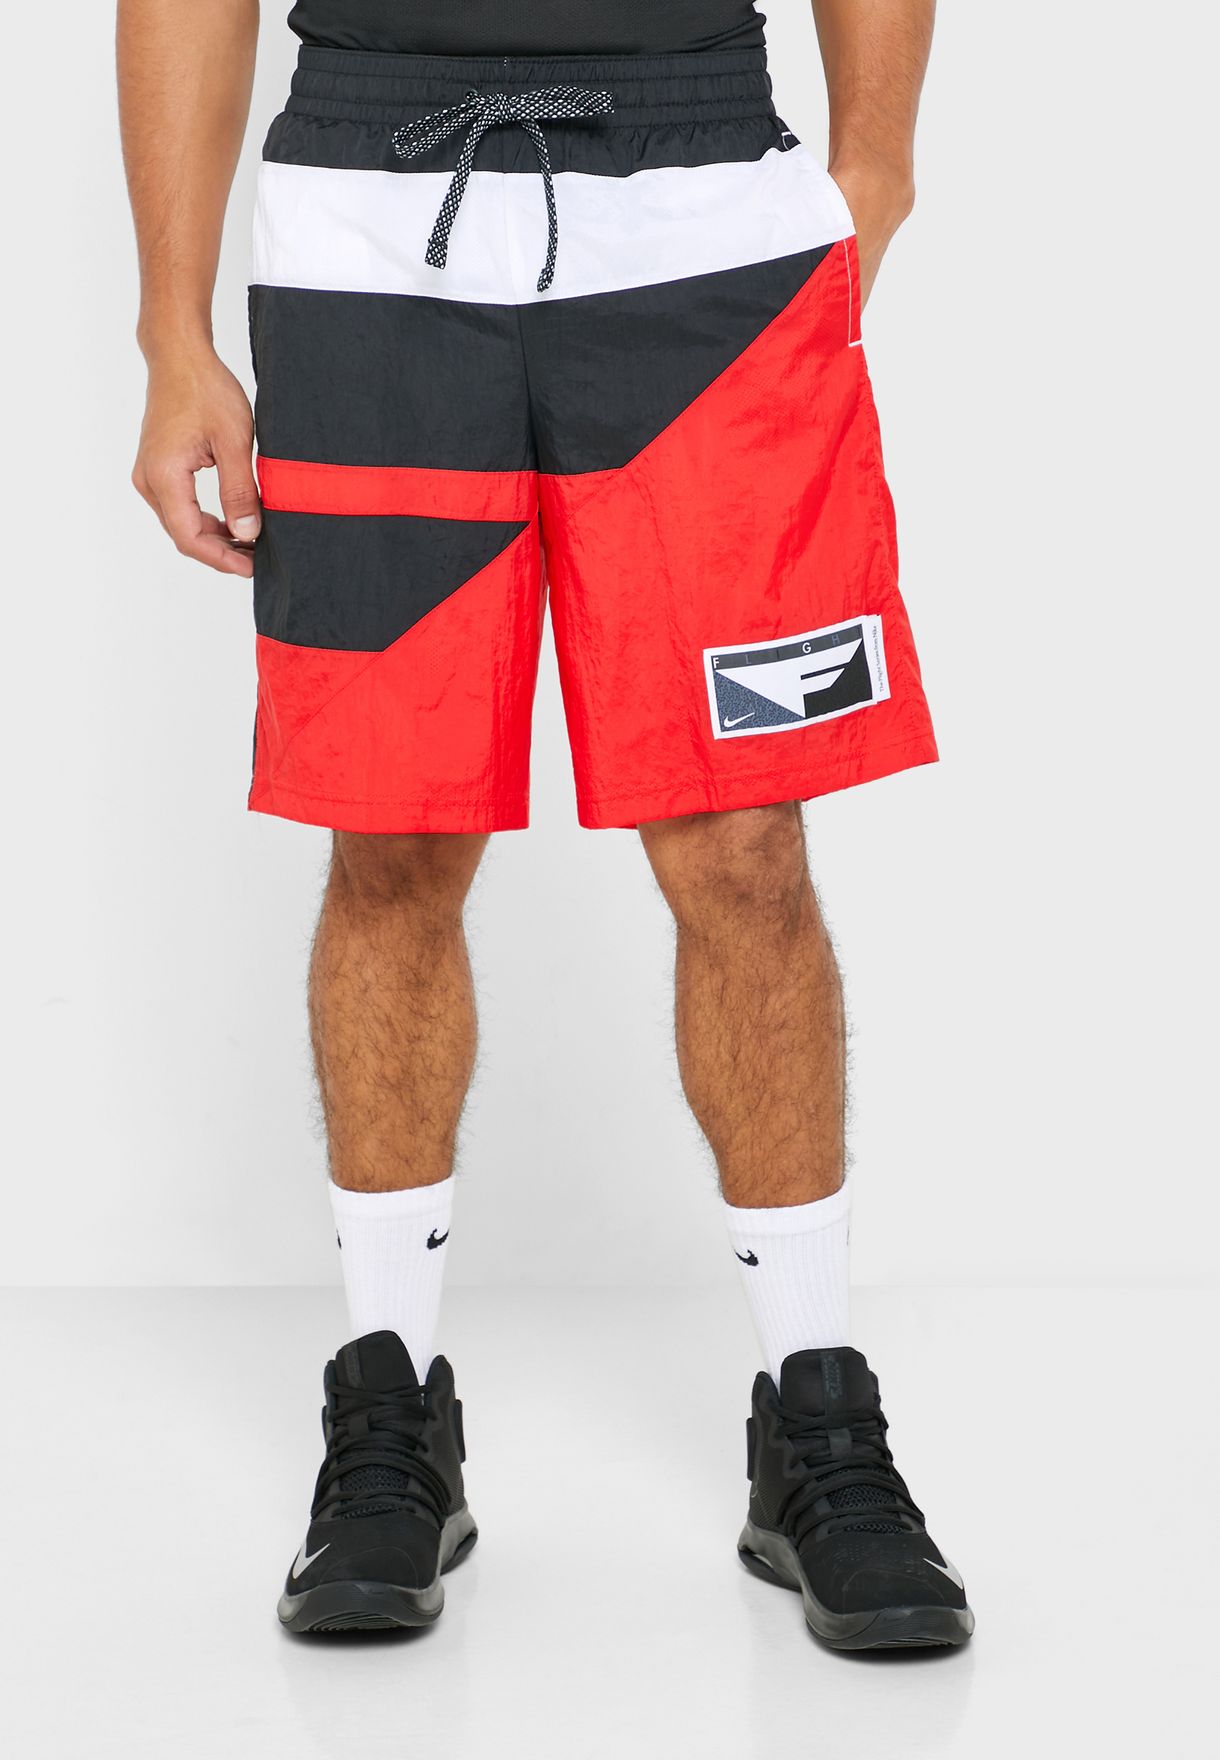 Buy Nike multicolor Flight Shorts for 